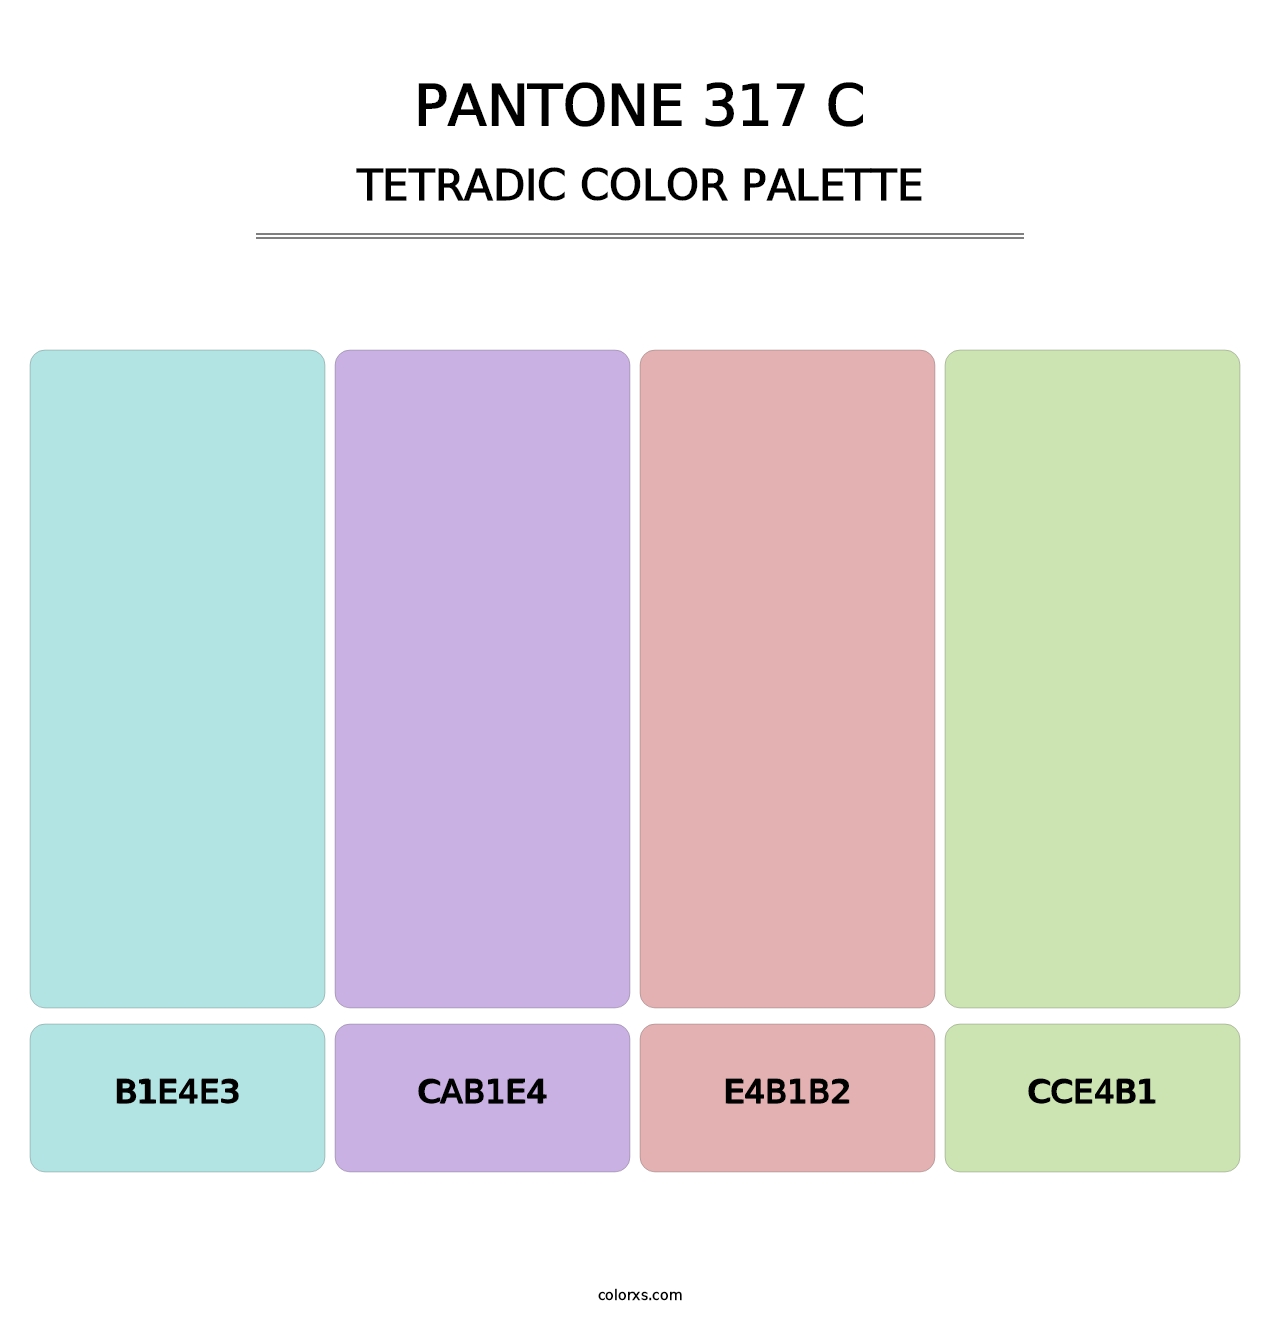 PANTONE 317 C - Tetradic Color Palette